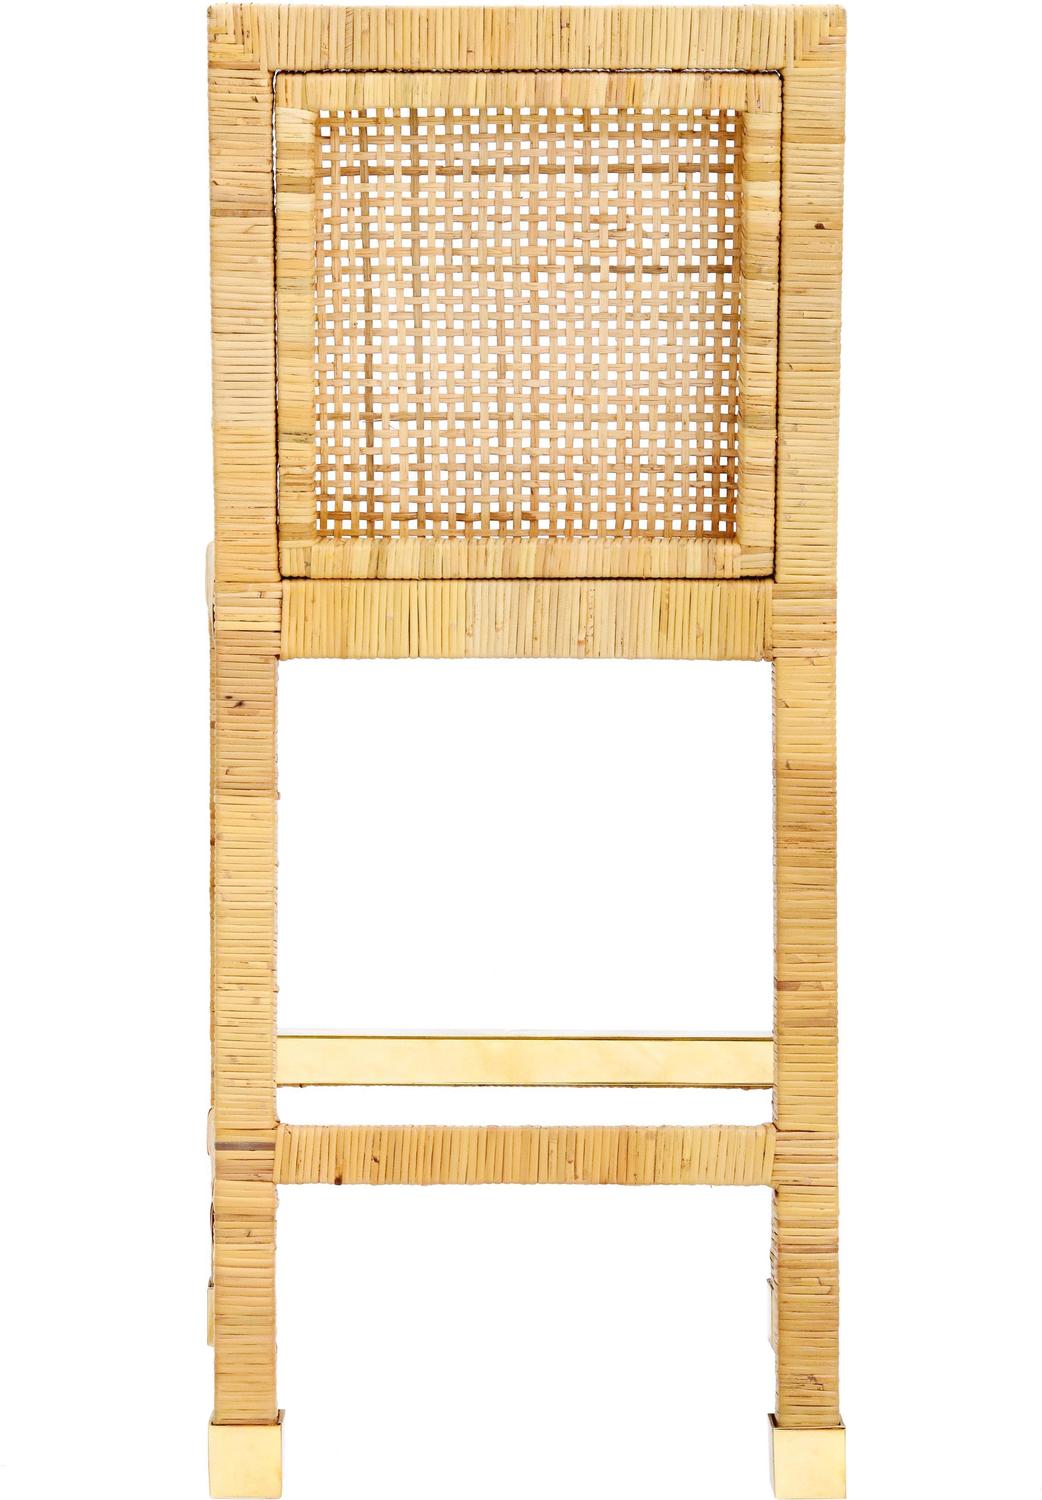 grey and oak bar stool Contemporary Design Furniture Stools Natural